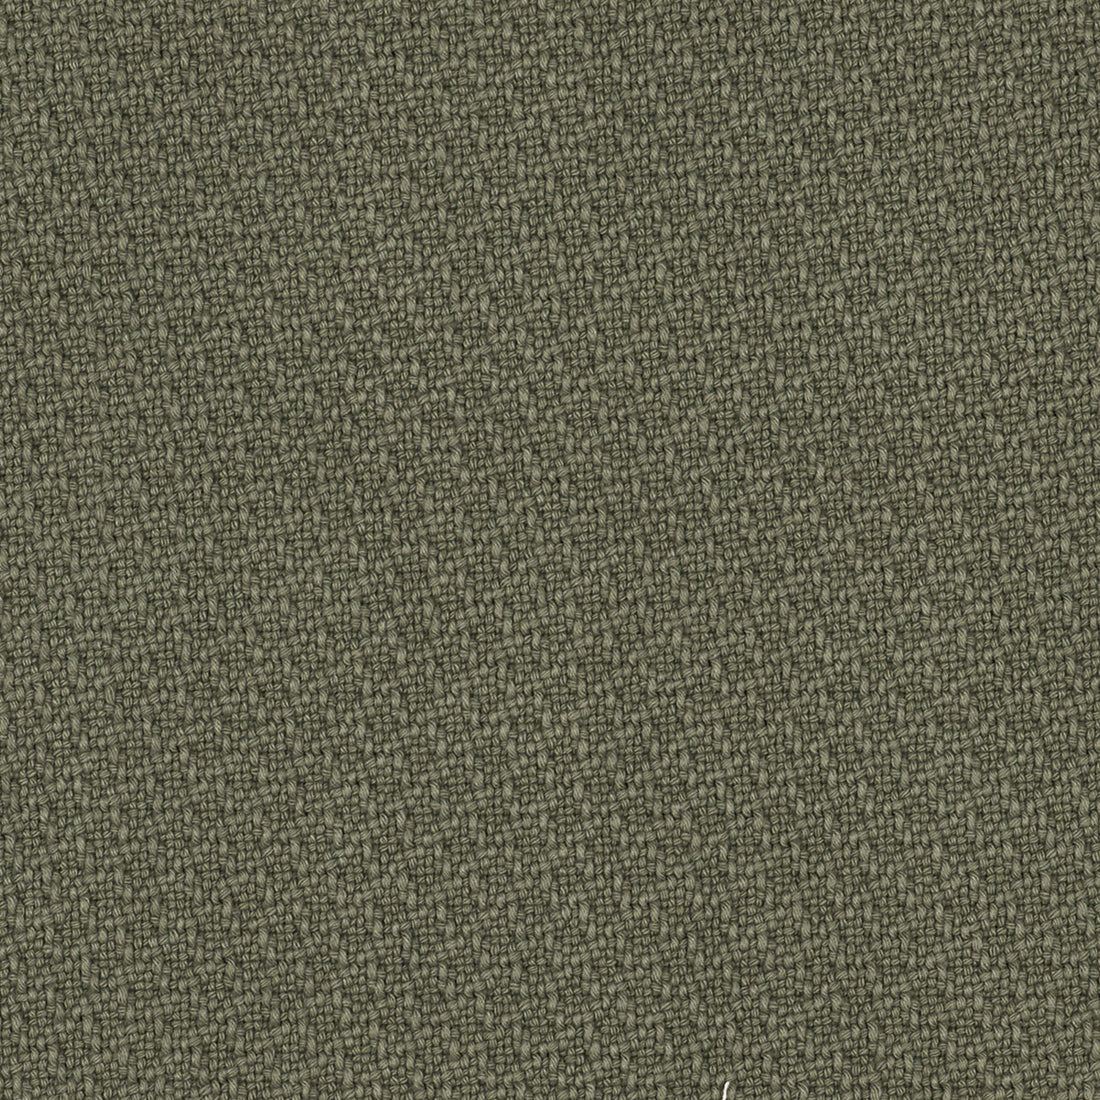 Ordono fabric in verde color - pattern LCT1003.005.0 - by Gaston y Daniela in the Lorenzo Castillo V collection